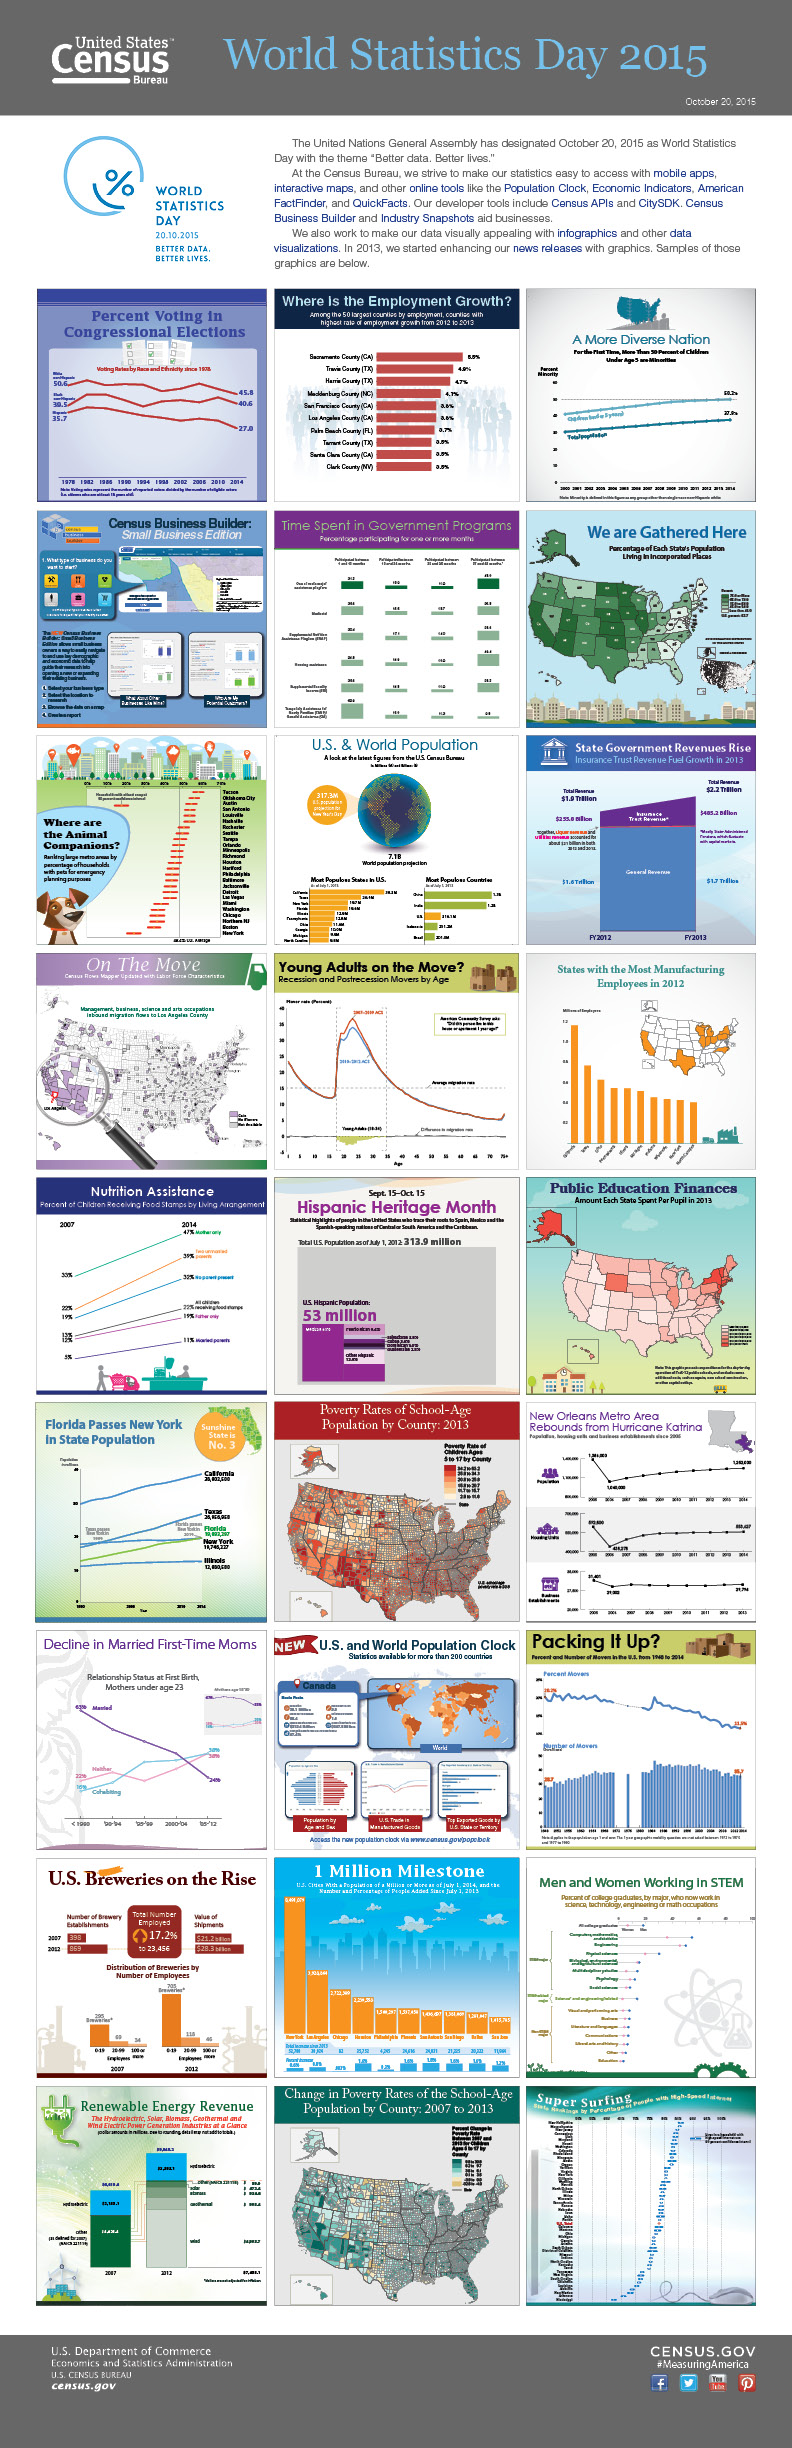 Infographic: World Statistics Day 2015 [JPG]